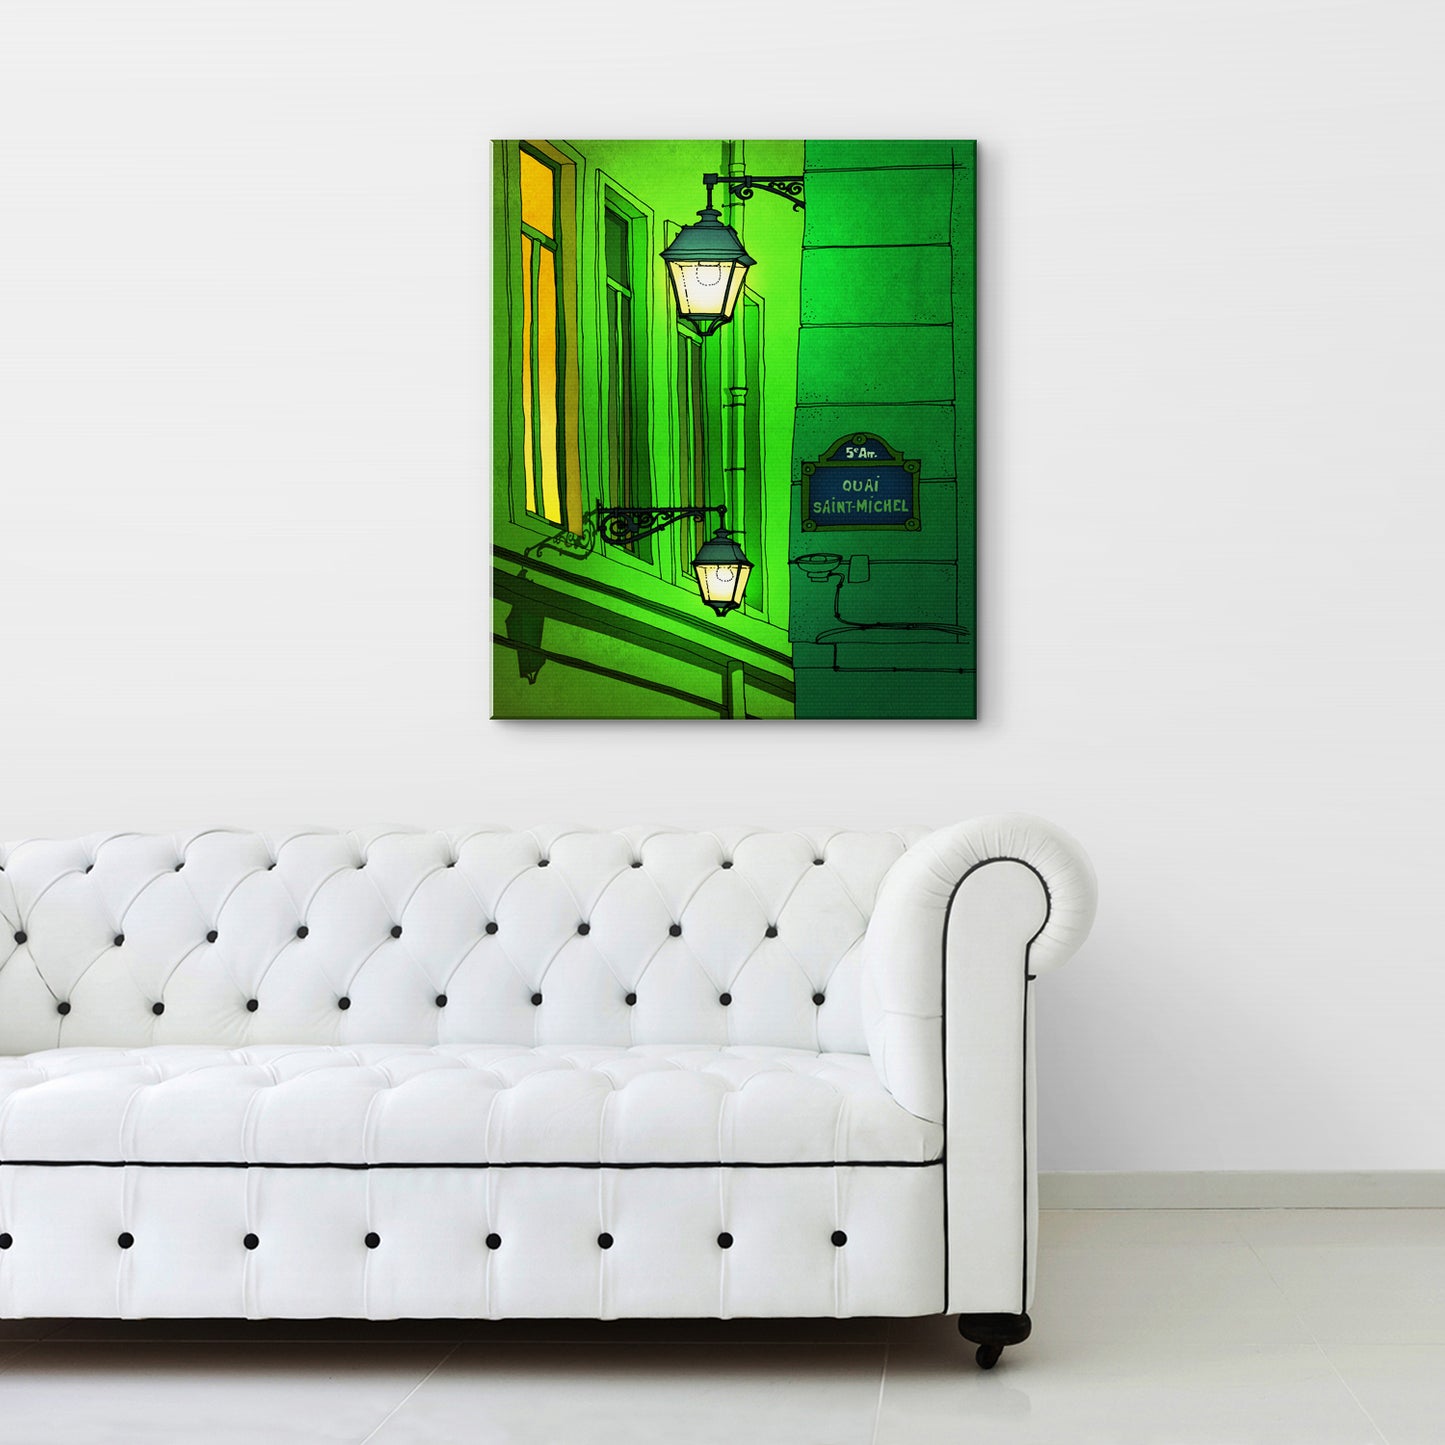 Quai St Michel (green) - Canvas Art Print